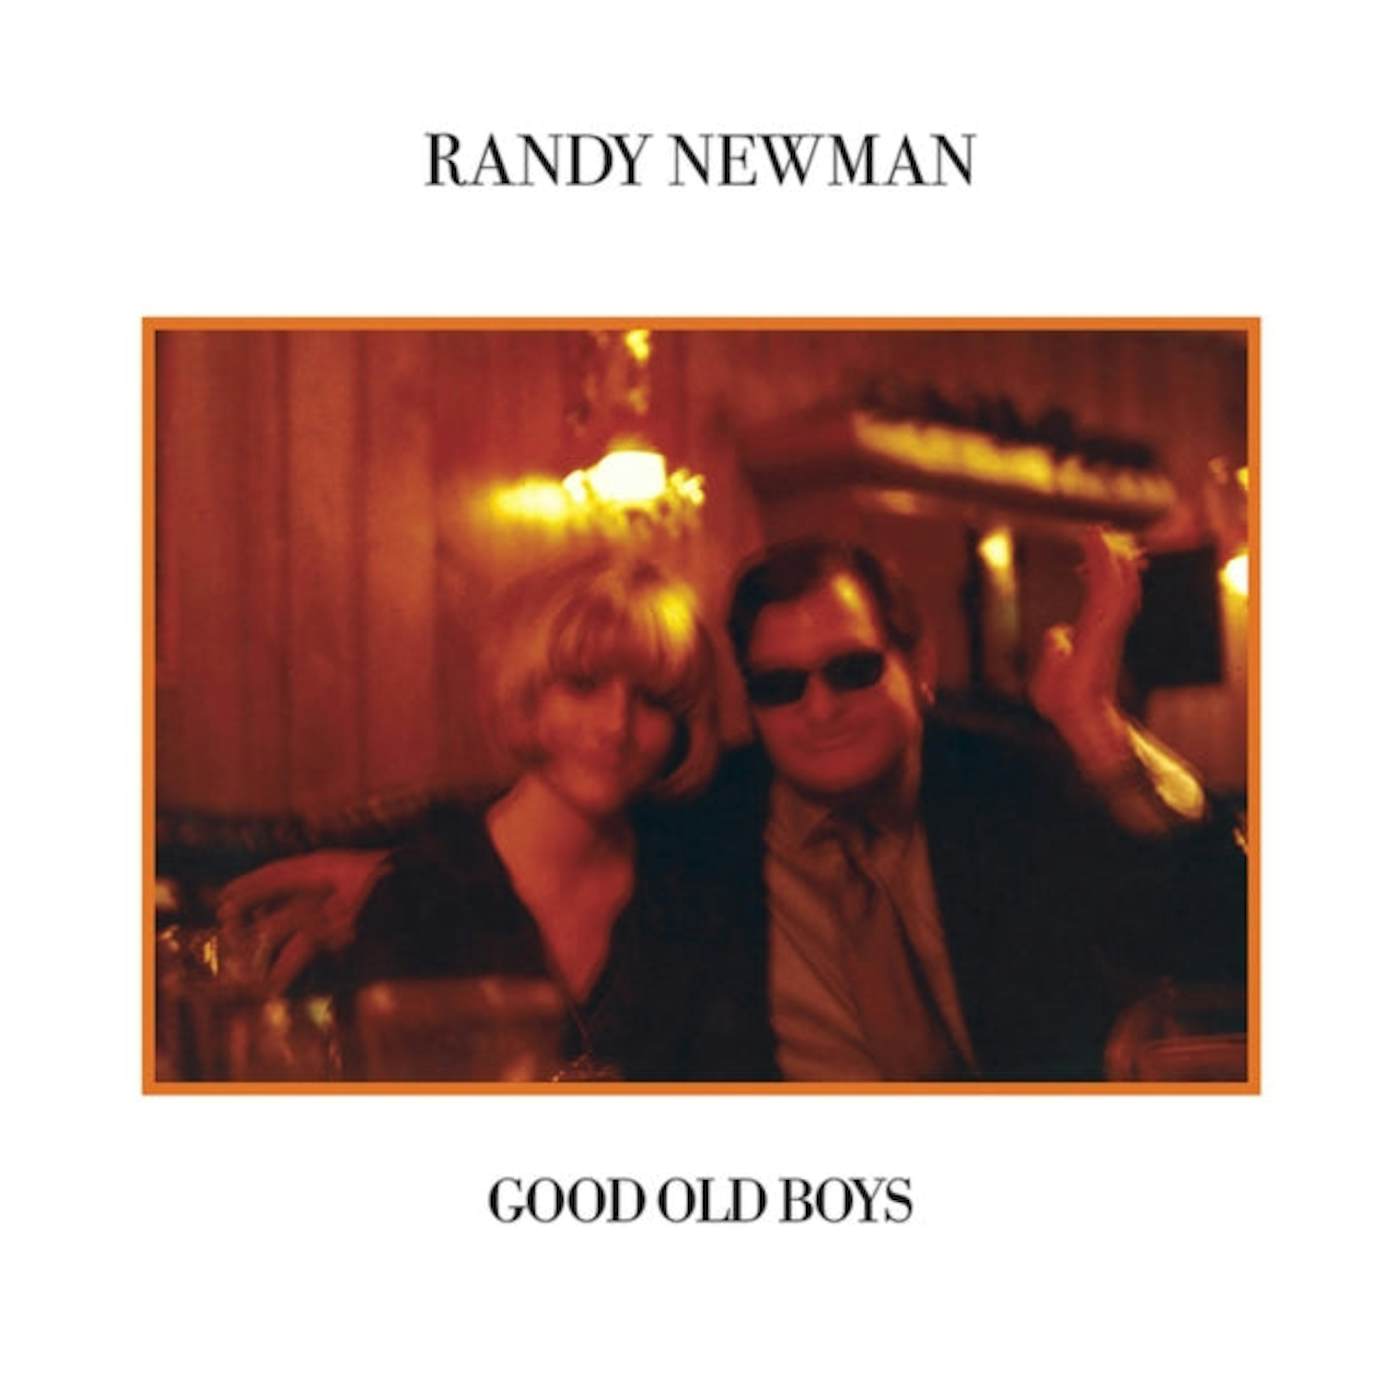 Randy Newman LP Vinyl Record - Good Old Boys (Deluxe Edition)